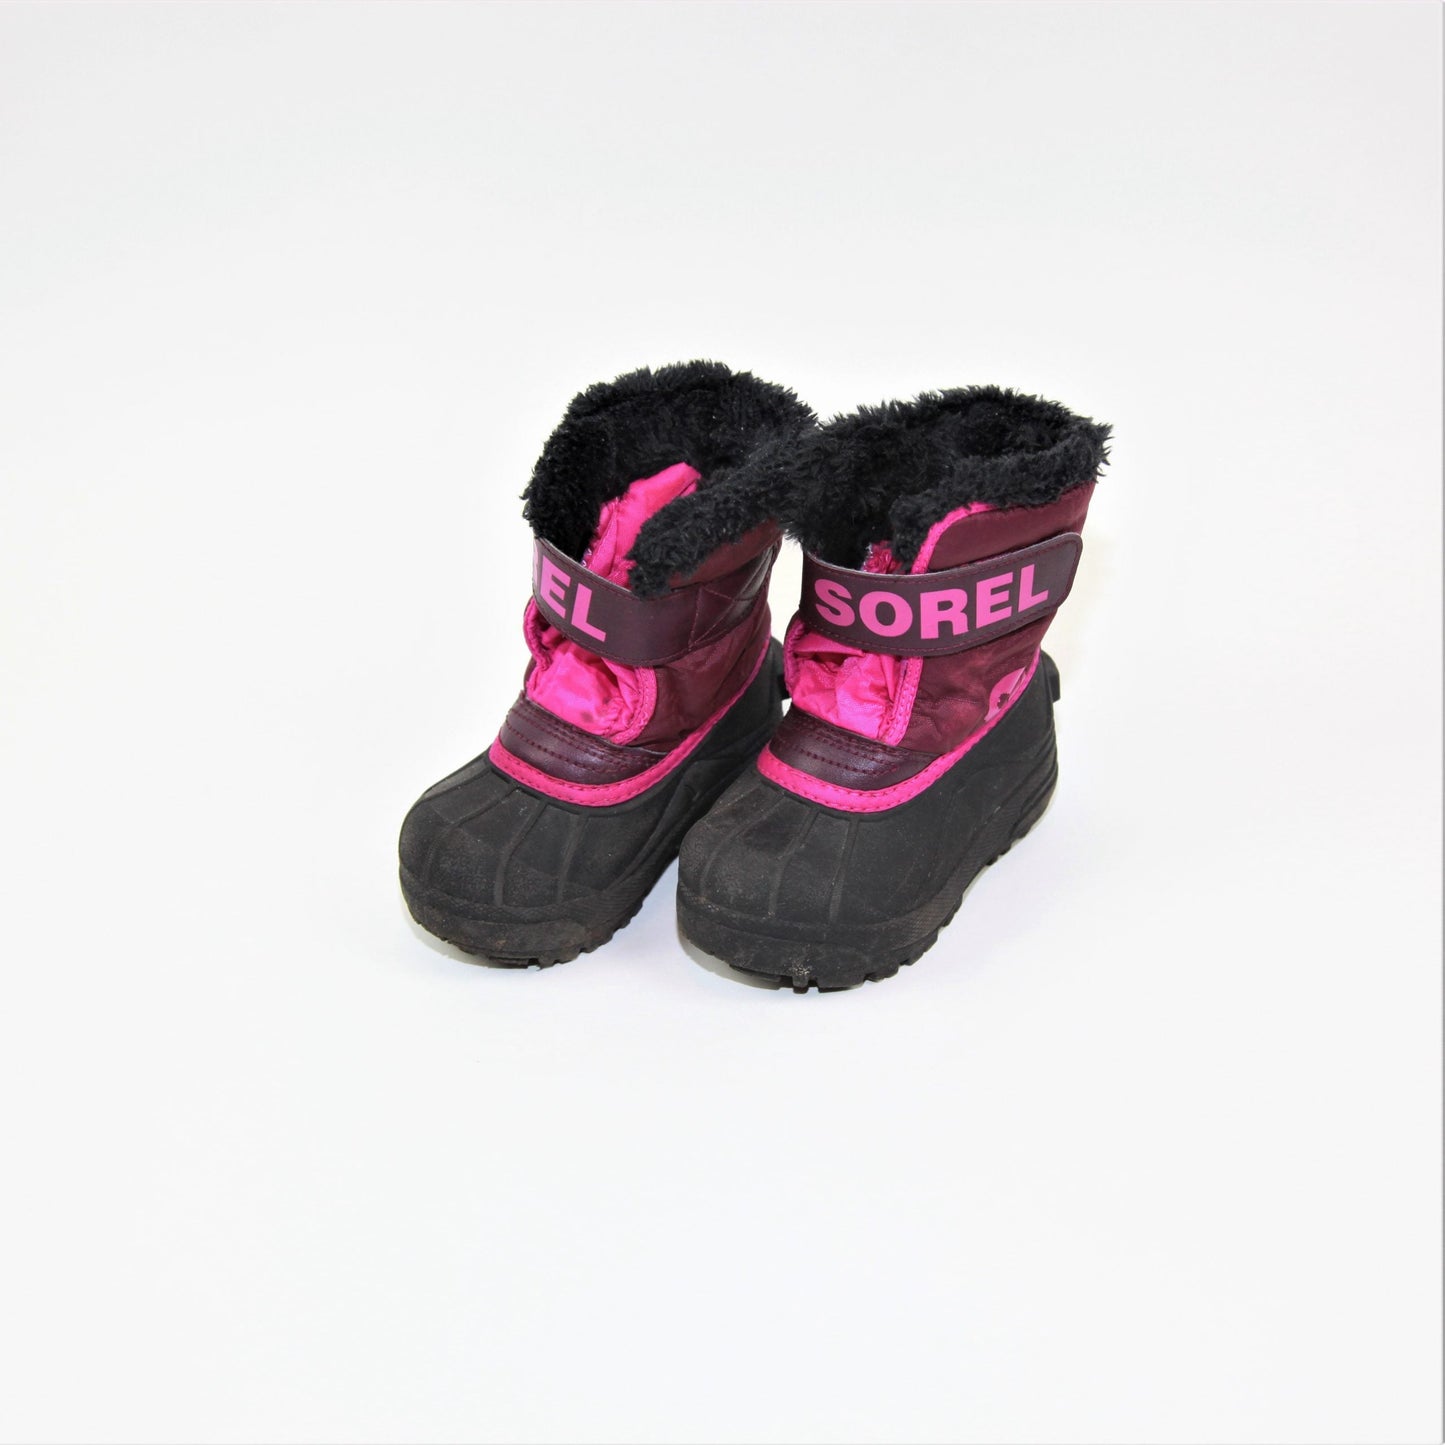 Sorel Snow Boots Size 7 